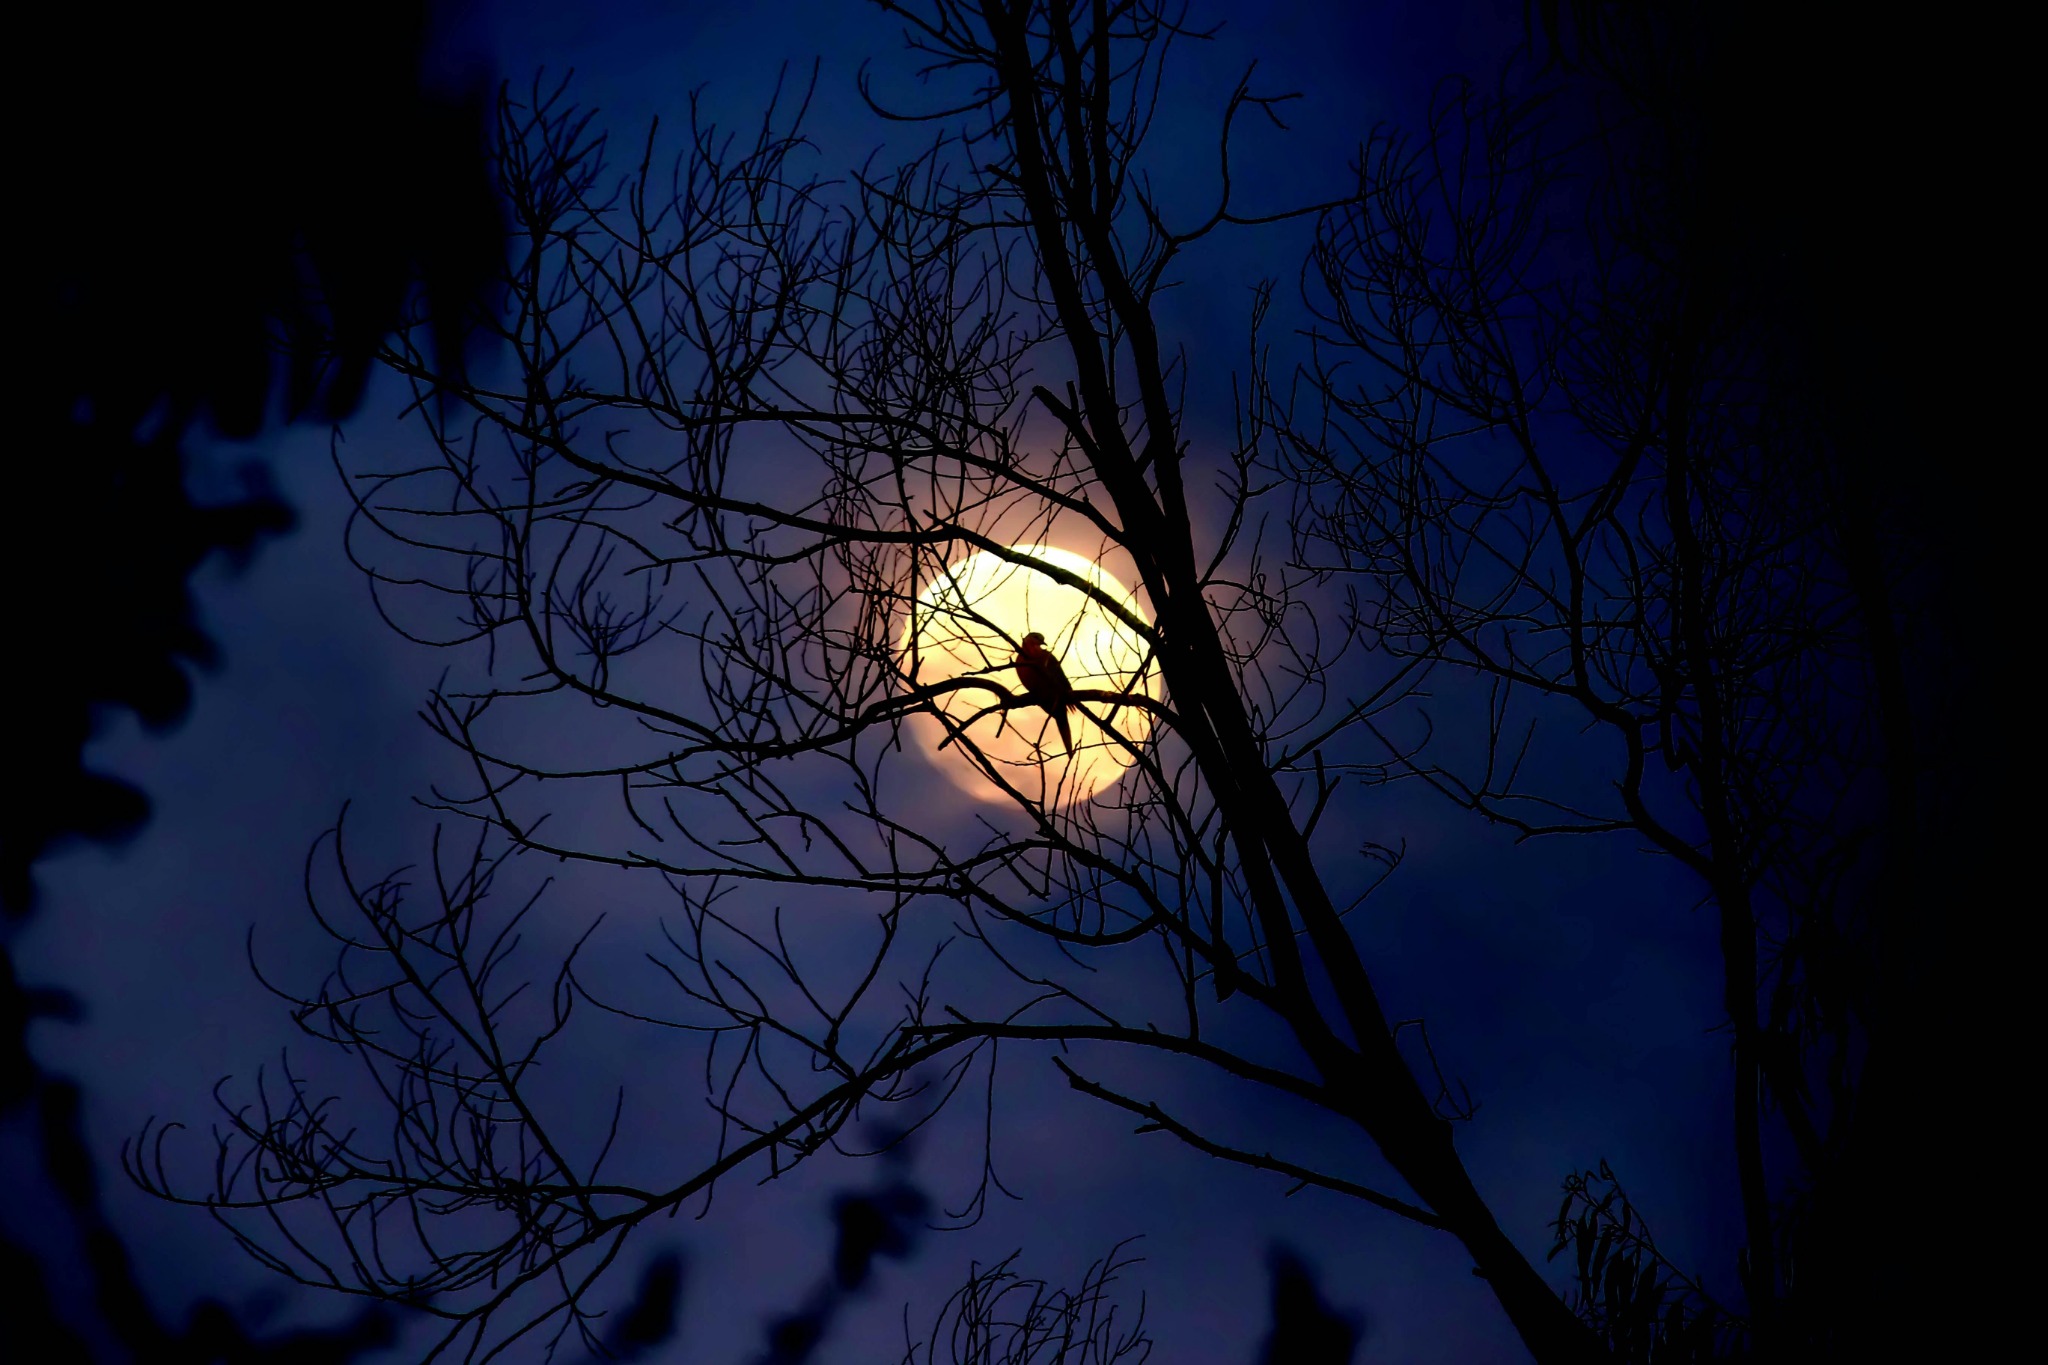 Spider silhouette full moon